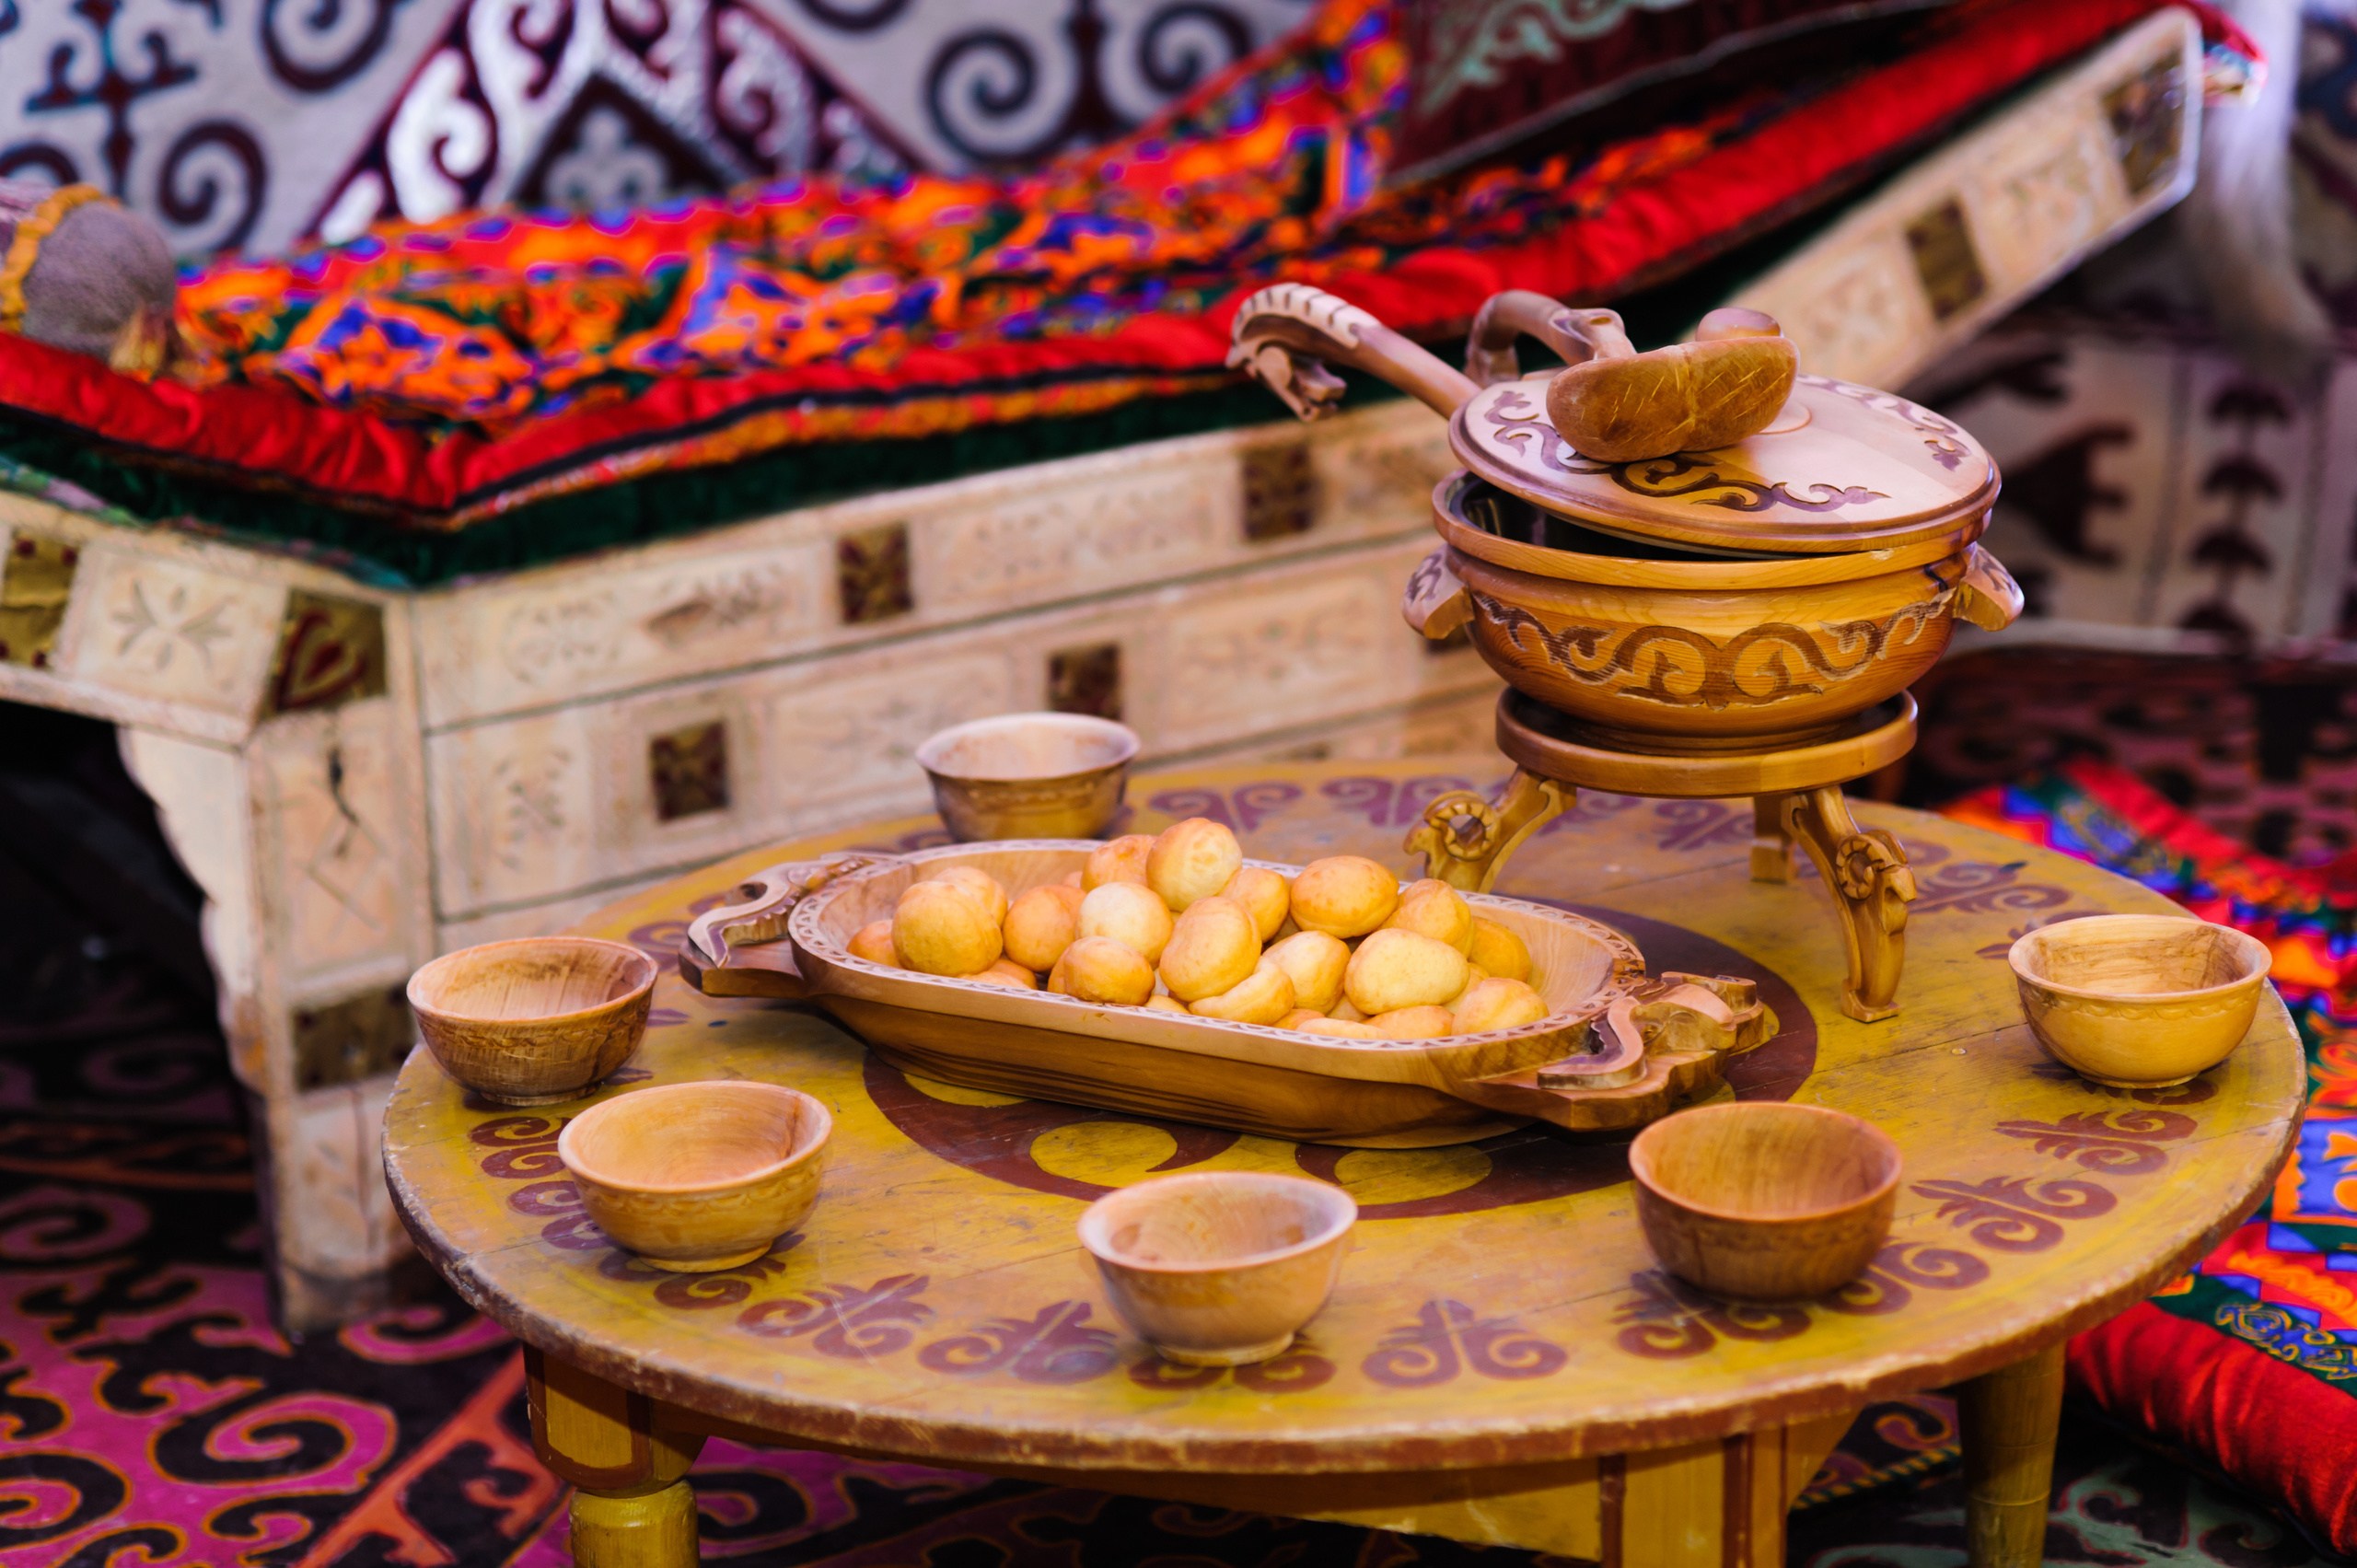 Казахская национальная посуда. Дастархан Узбекистан. Казахские национальные блюда это Наурыз коже. Казахский национальный стол. Казахский стол с едой.